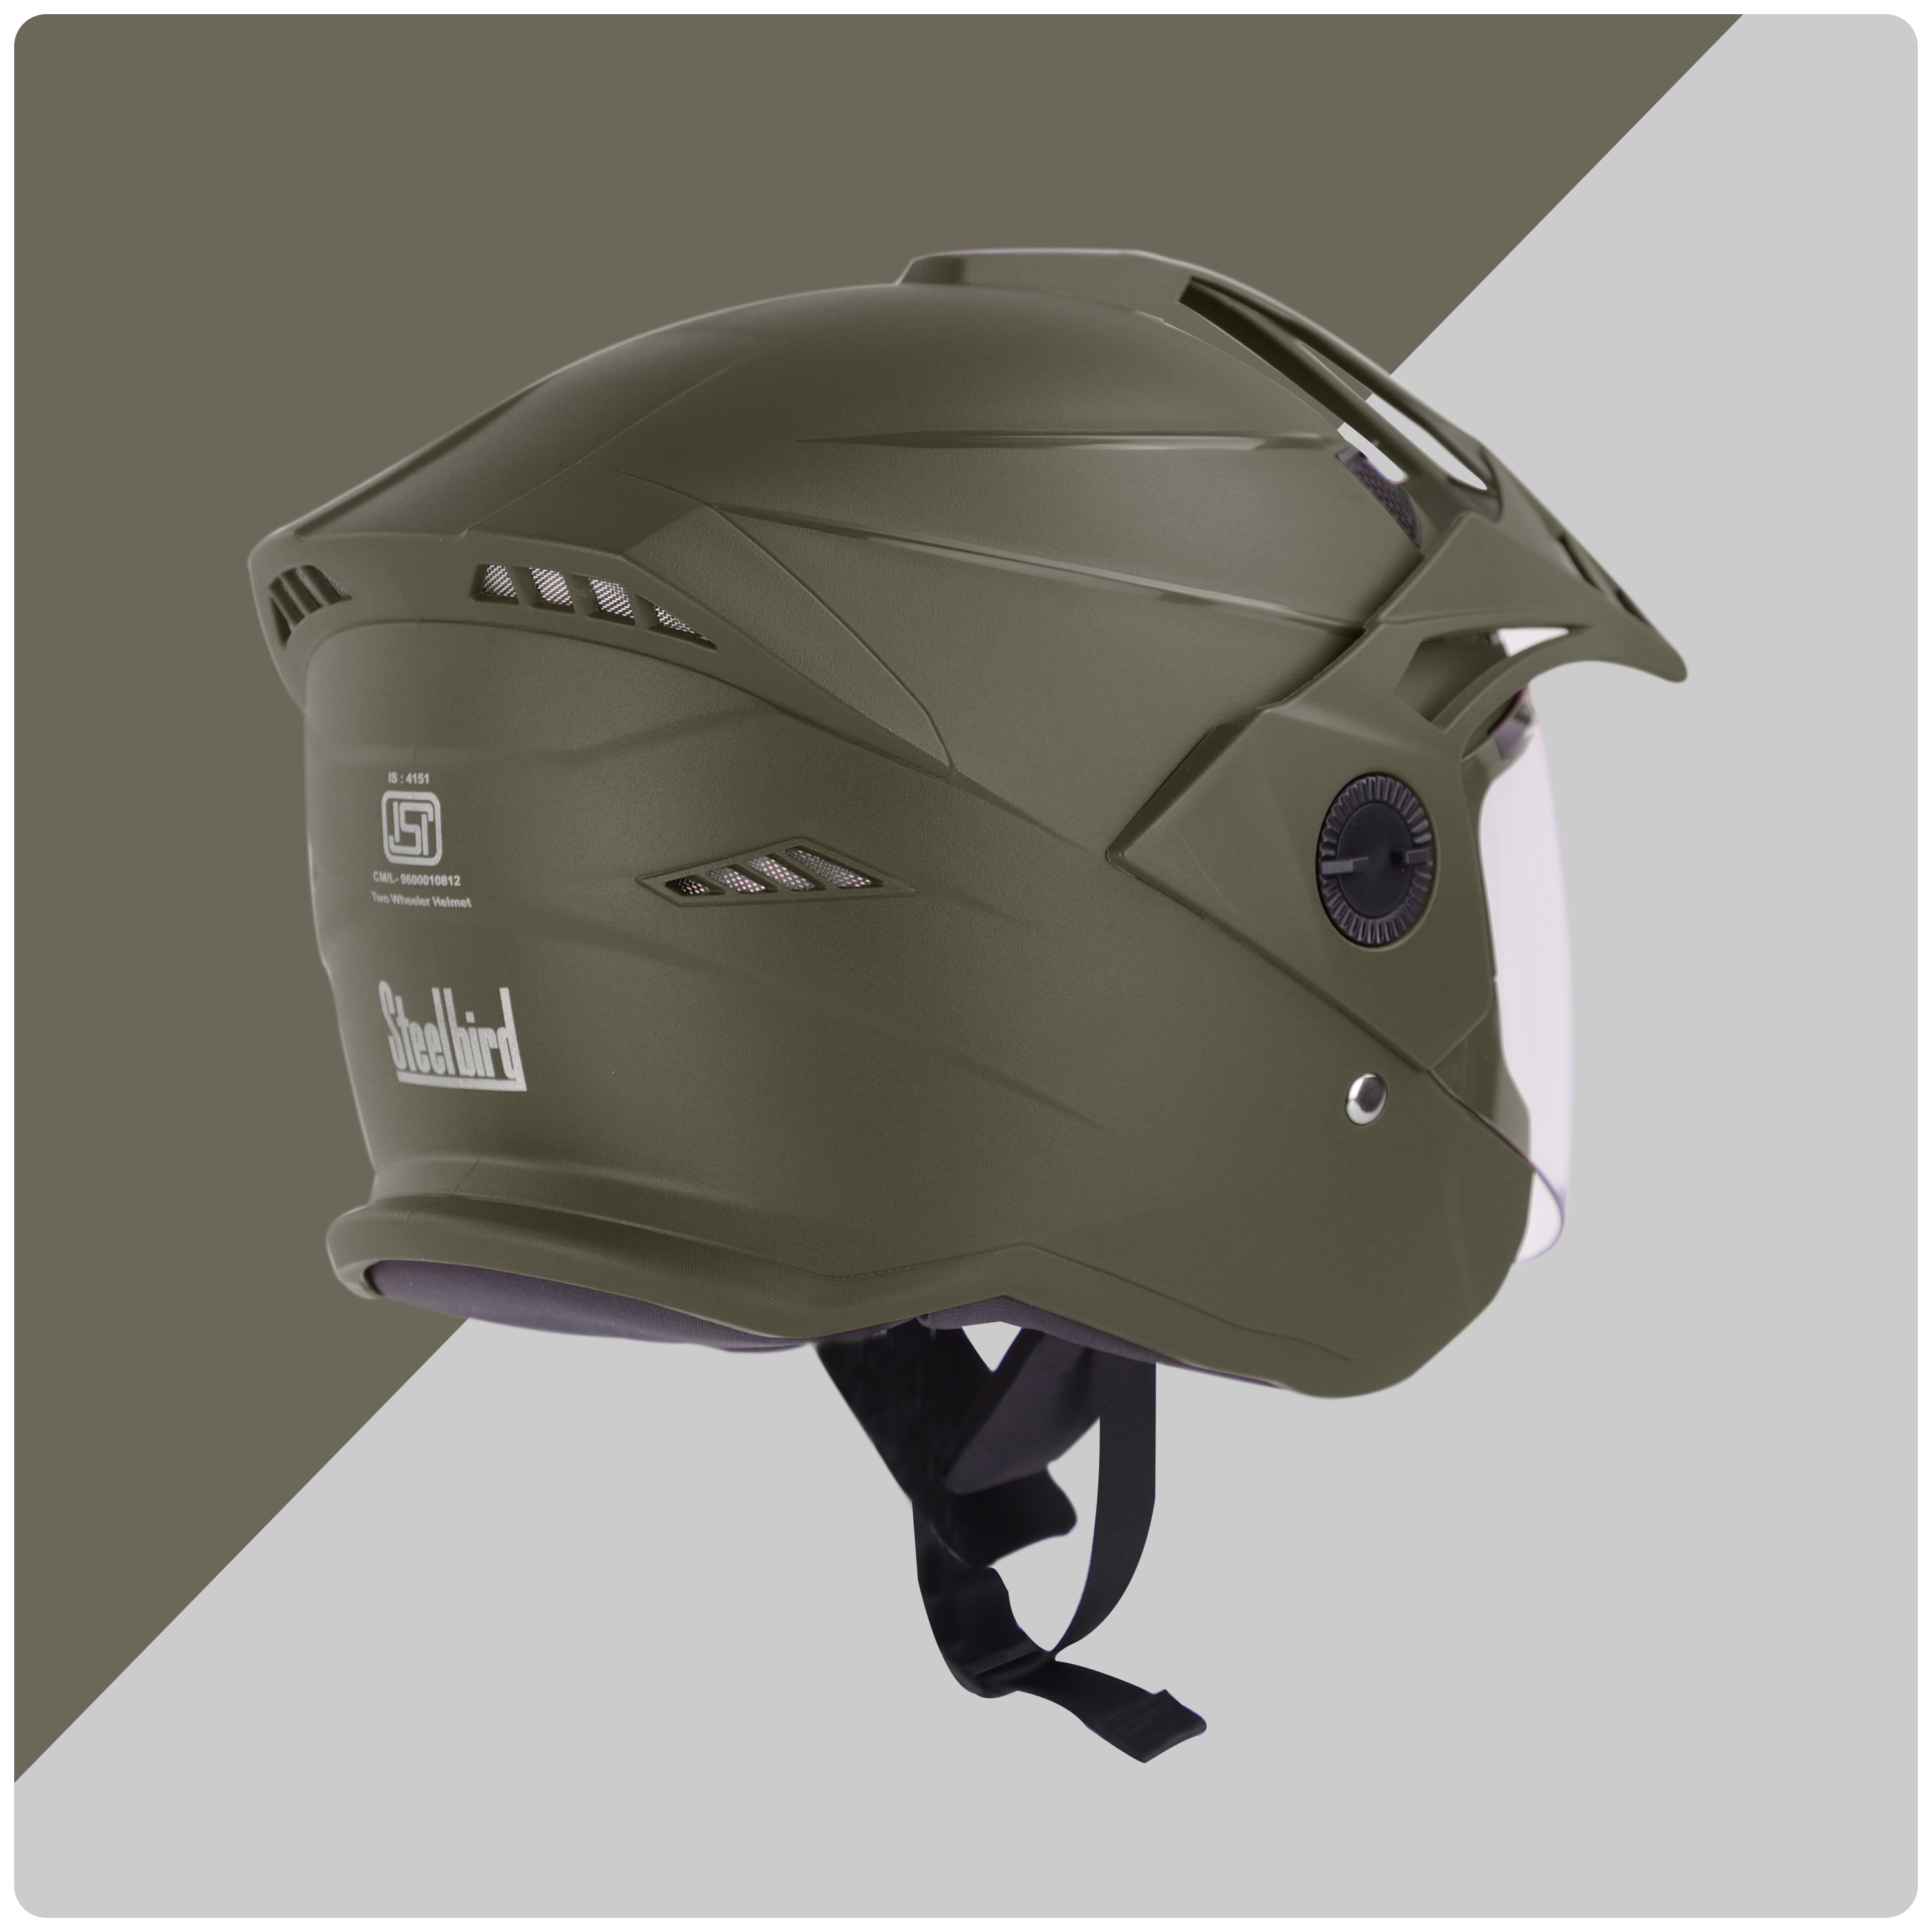 Steelbird SBH-23 Hunter ISI Certified Open Face Helmet (Dashing Battle Green With Clear Visor)